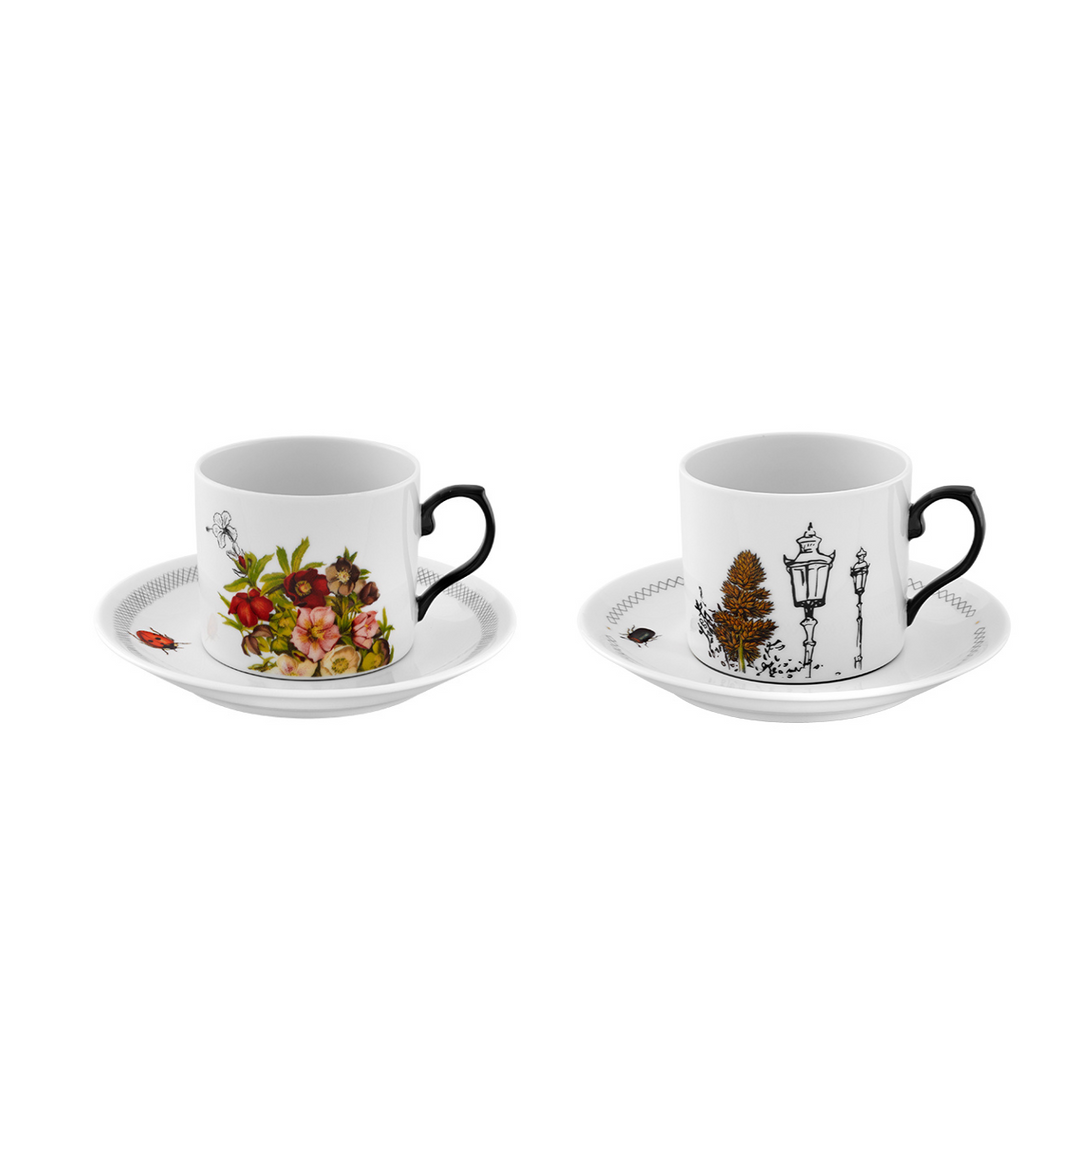 Petites Histoires Set of 2 Tea Cup & Saucer